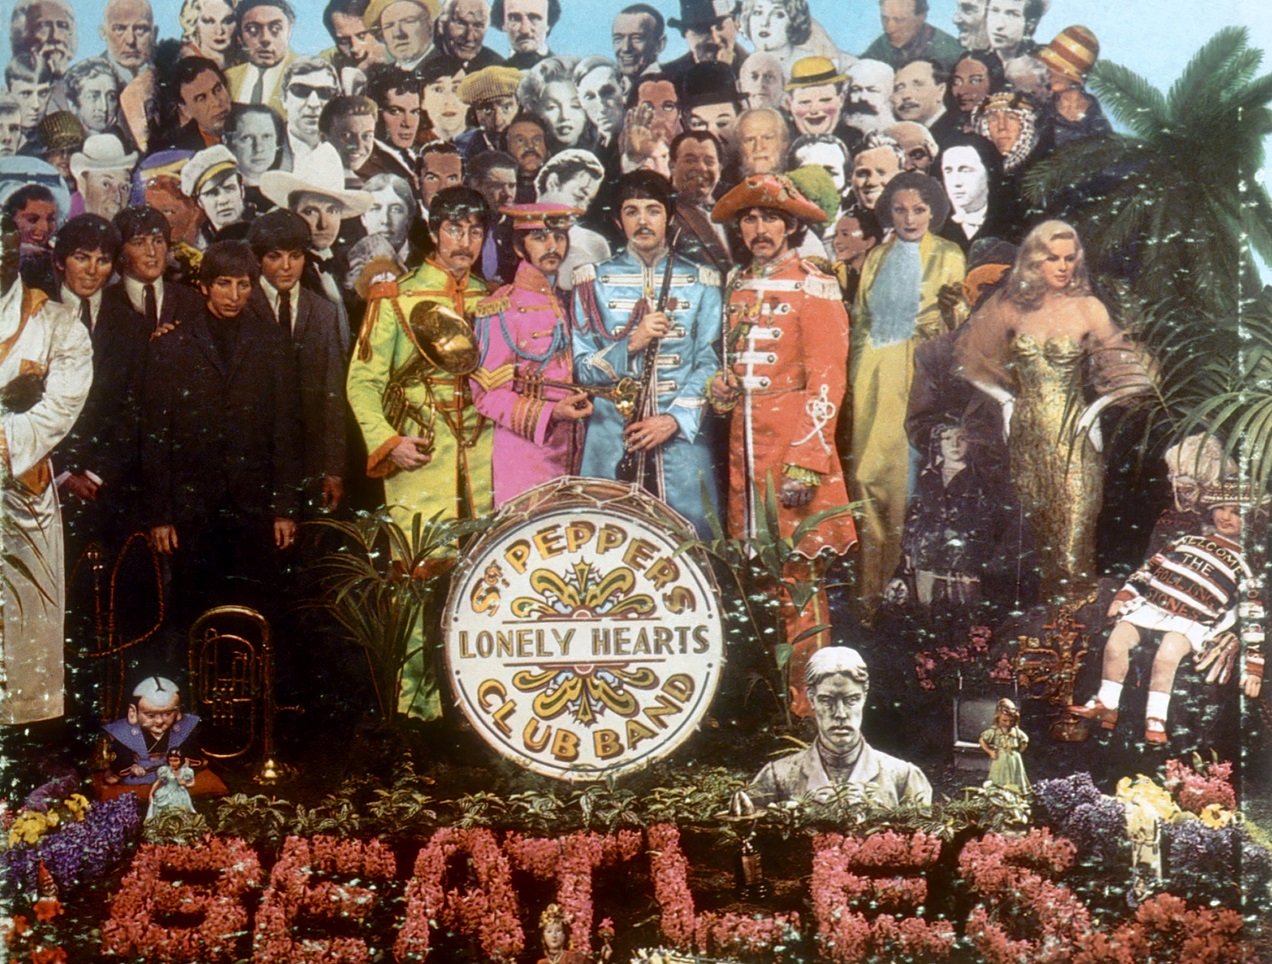 'Sgt. Pepper' album cover